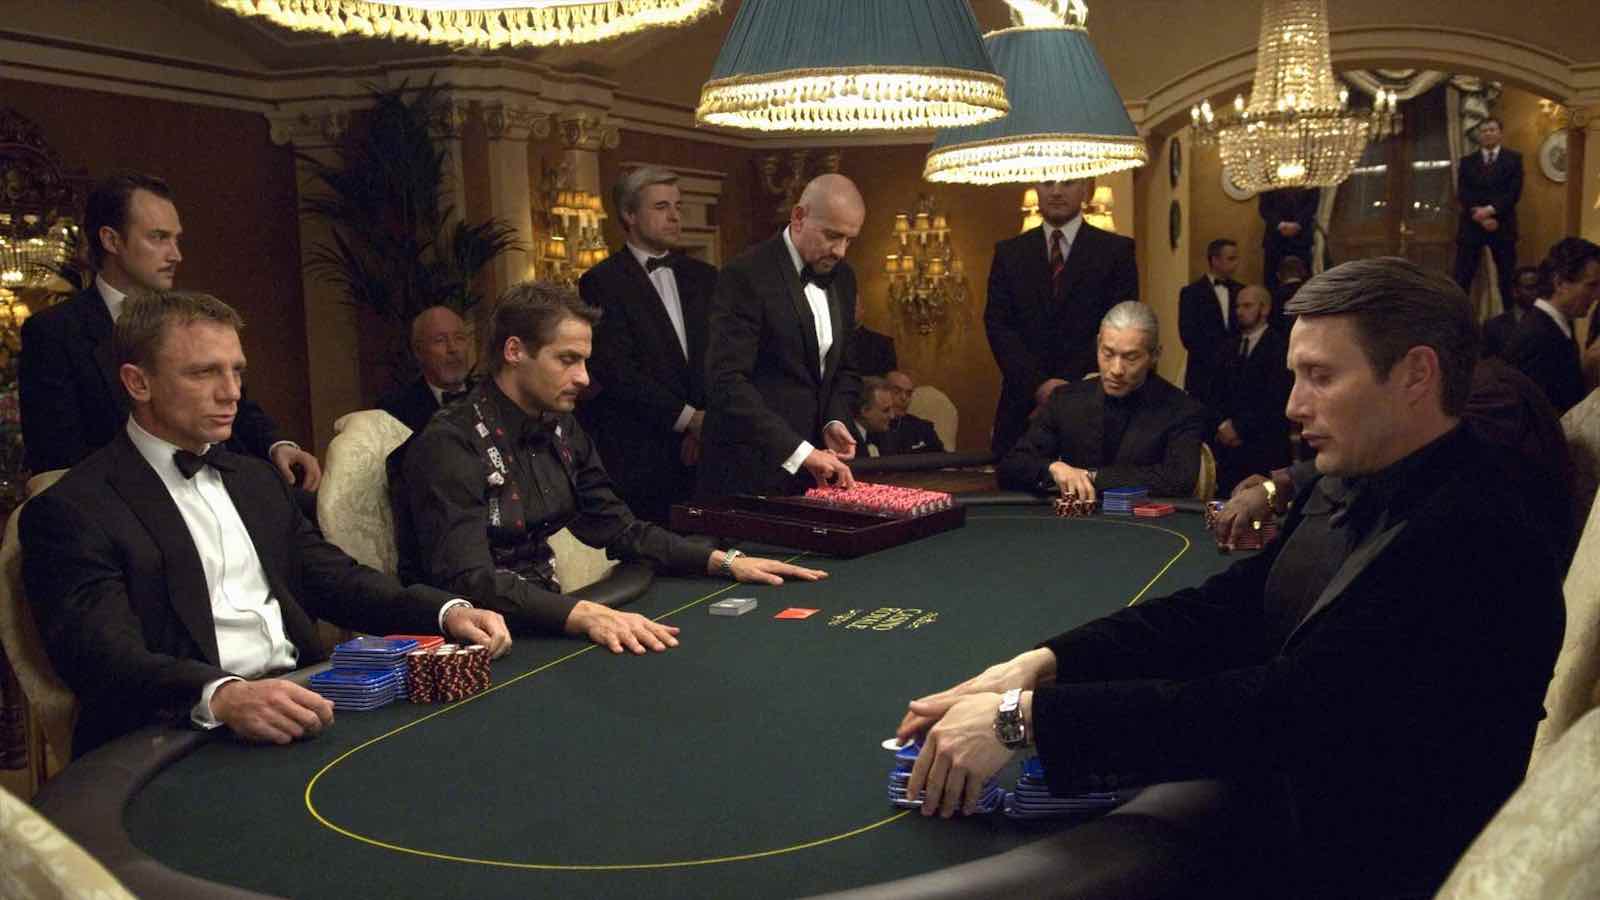 007 royal casino